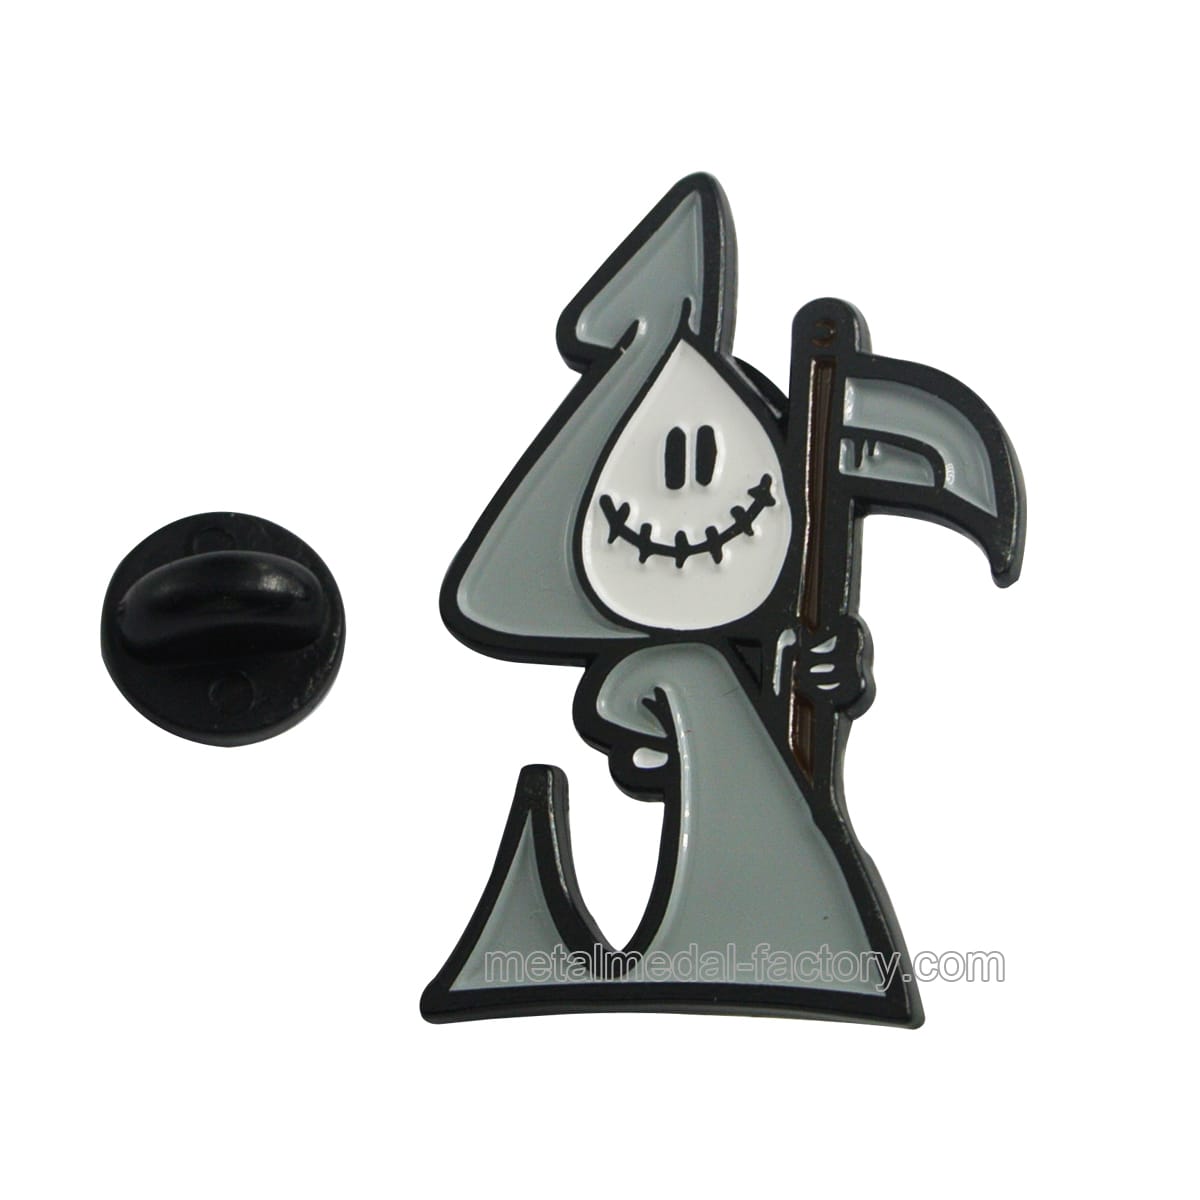 Devil shape custom made pin badges with logo